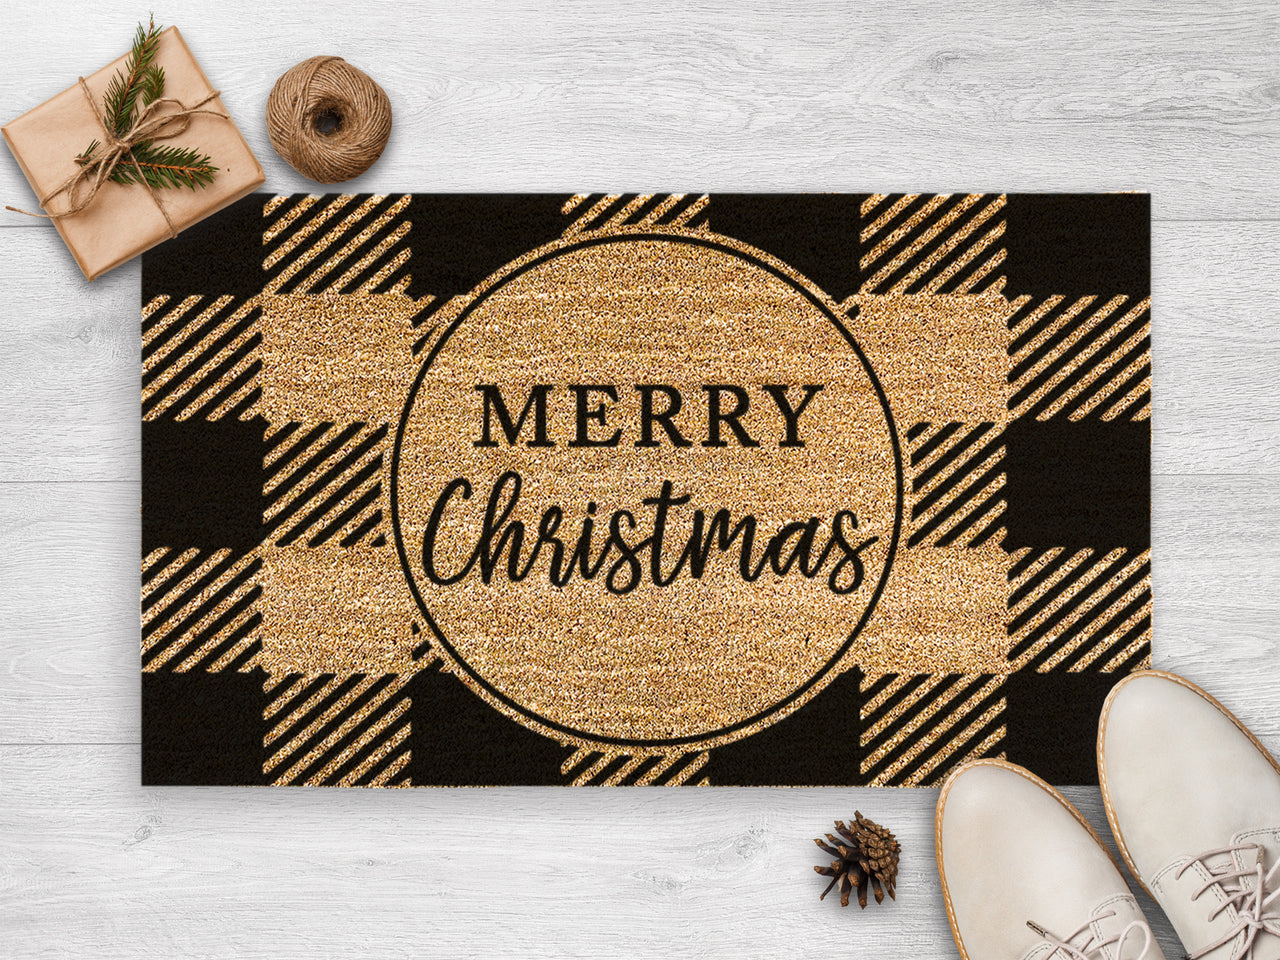 Merry Christmas Doormat - Christmas Door Mat - New Home Gift - Holiday Season